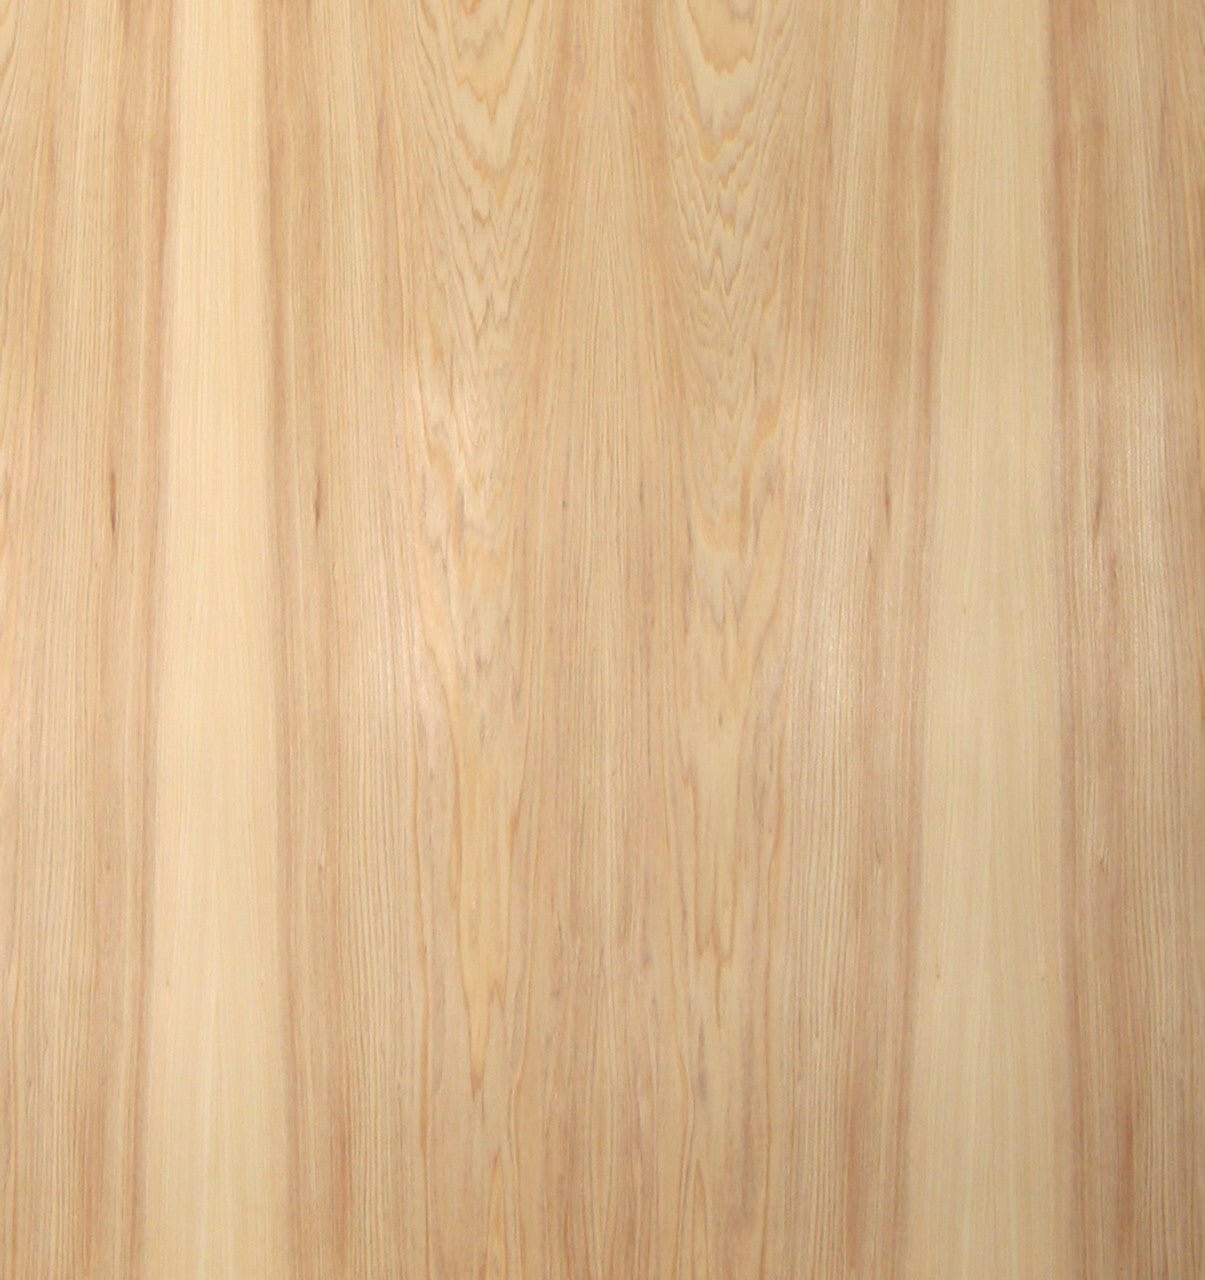 Cypress (Plywood) - Associated Hardwoods, Inc.